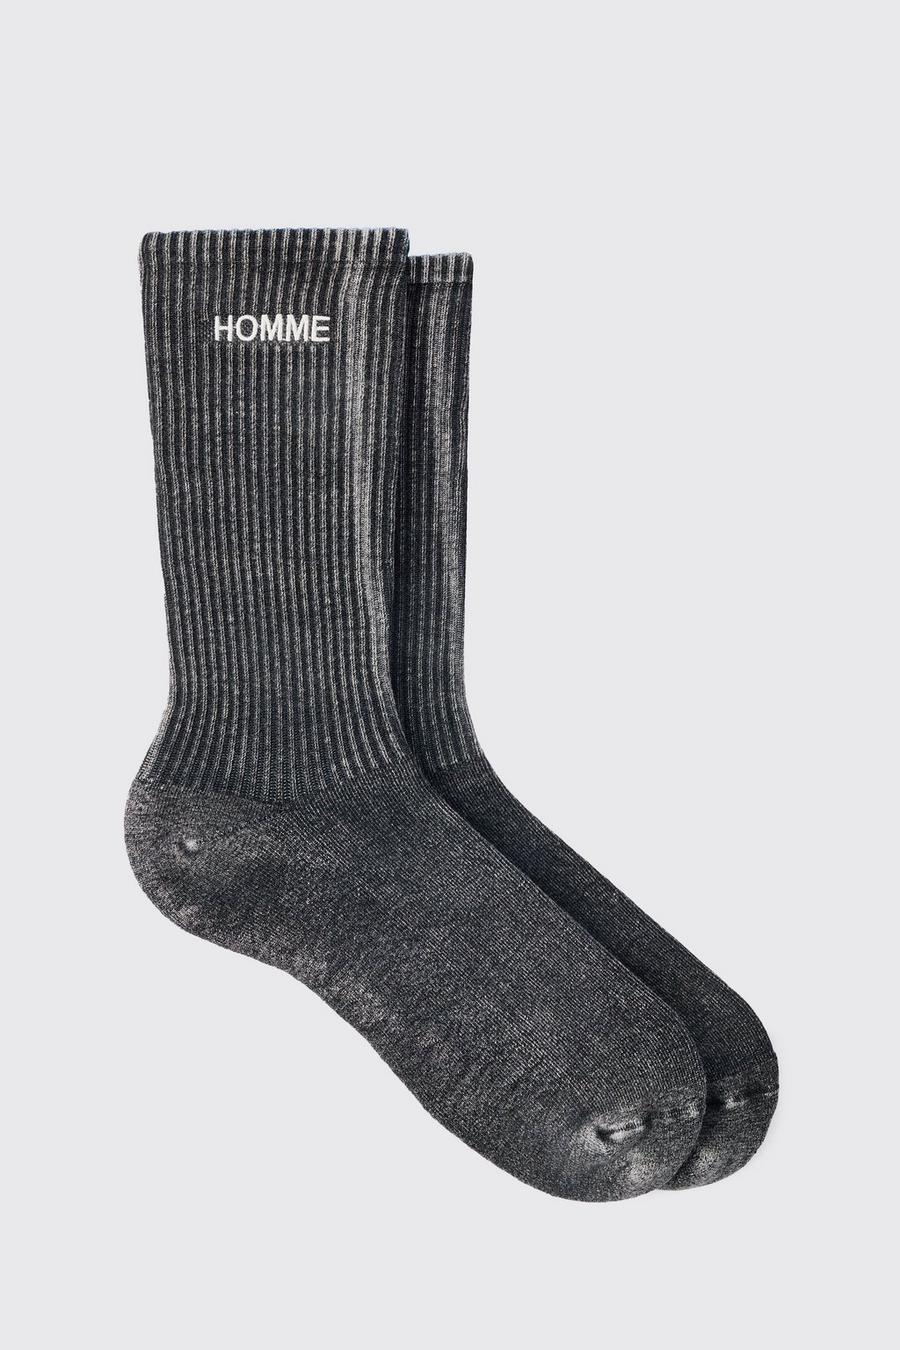 Homme Overdyed Grey Socks